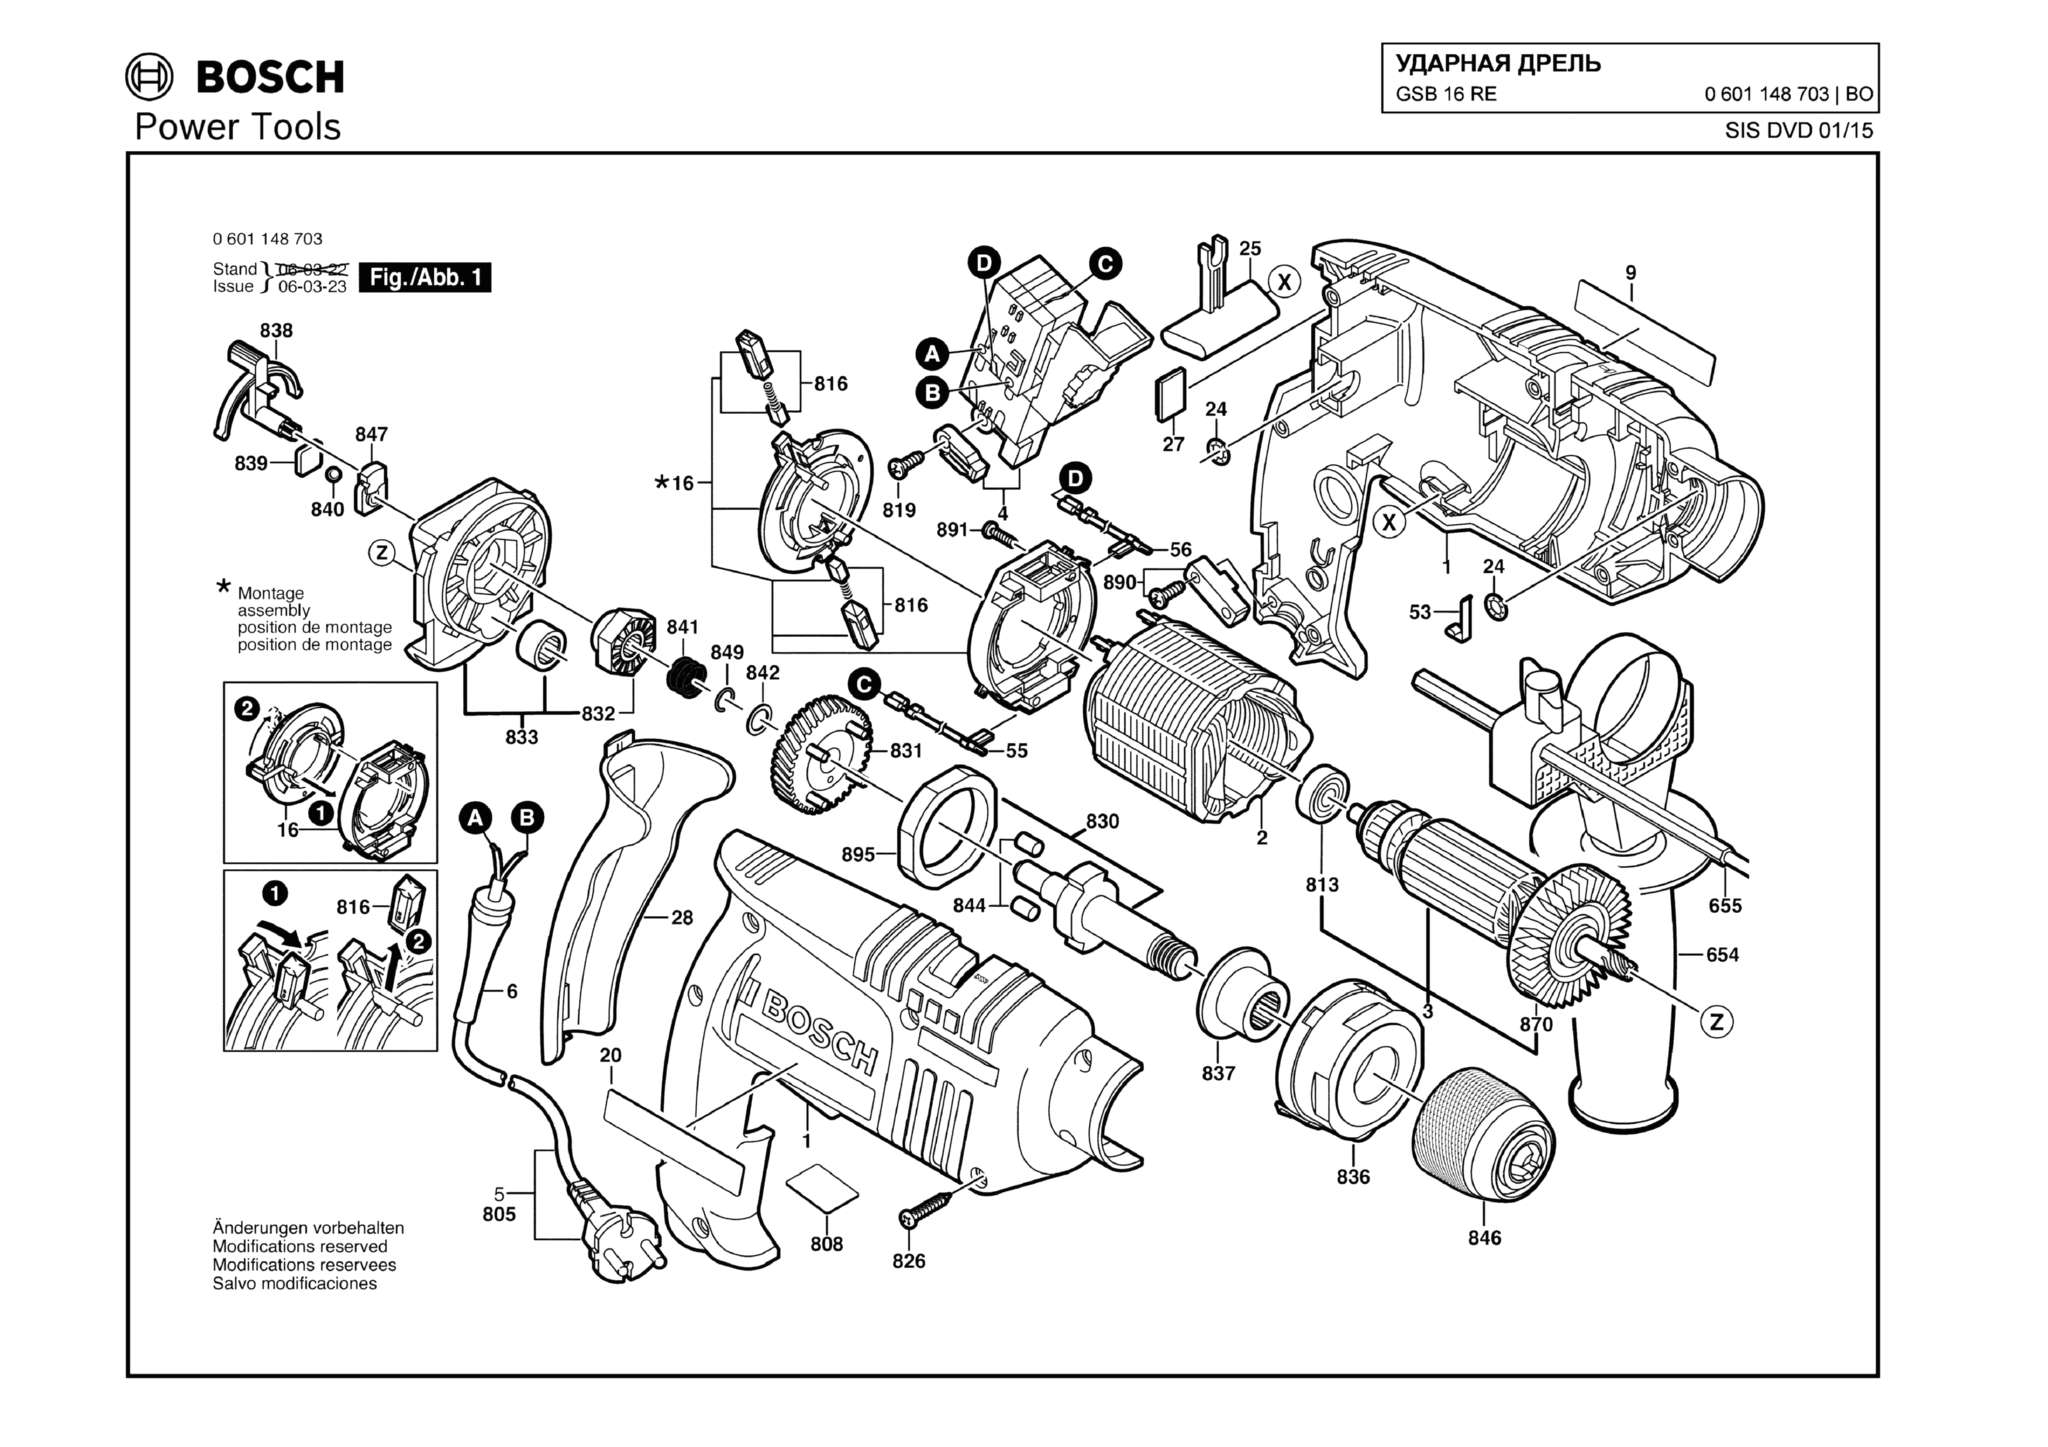 Запчасти, схема и деталировка Bosch GSB 16 RE (ТИП 0601148703)